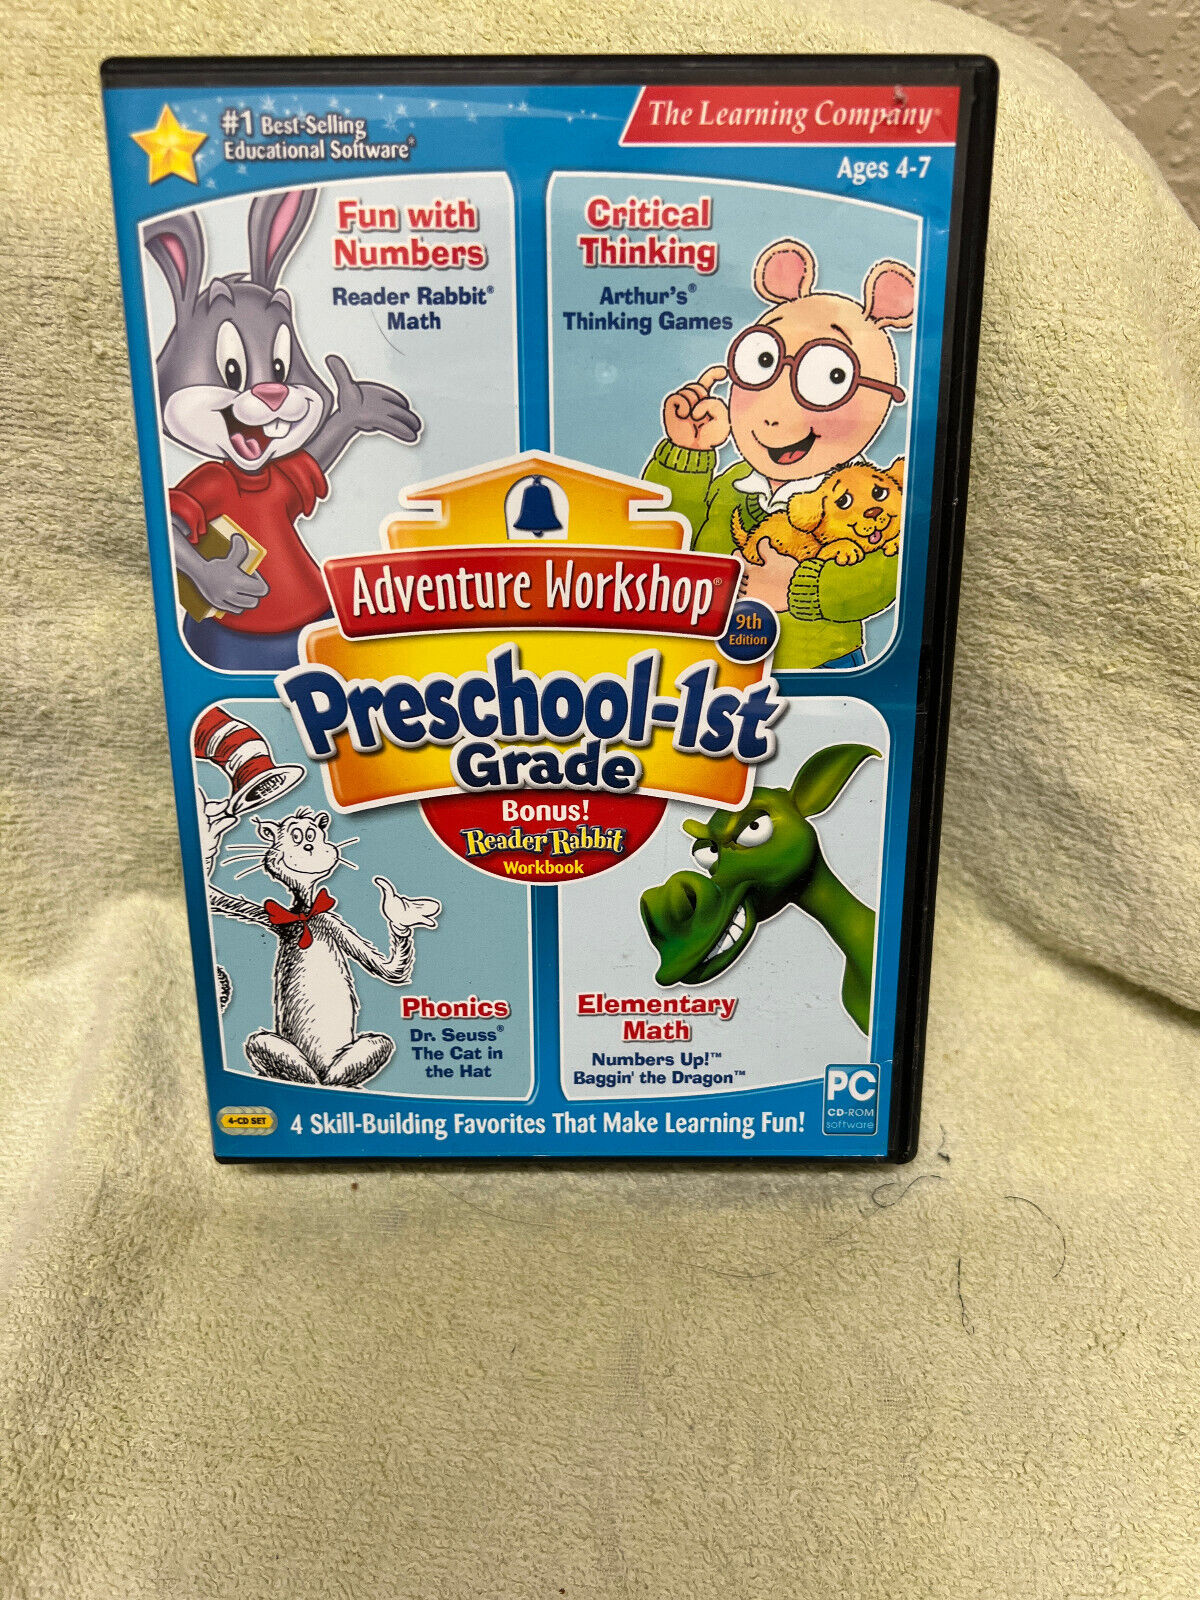 Adventure Workshop Preschool-1st Grade PC Game - Missing 2 CD\'s